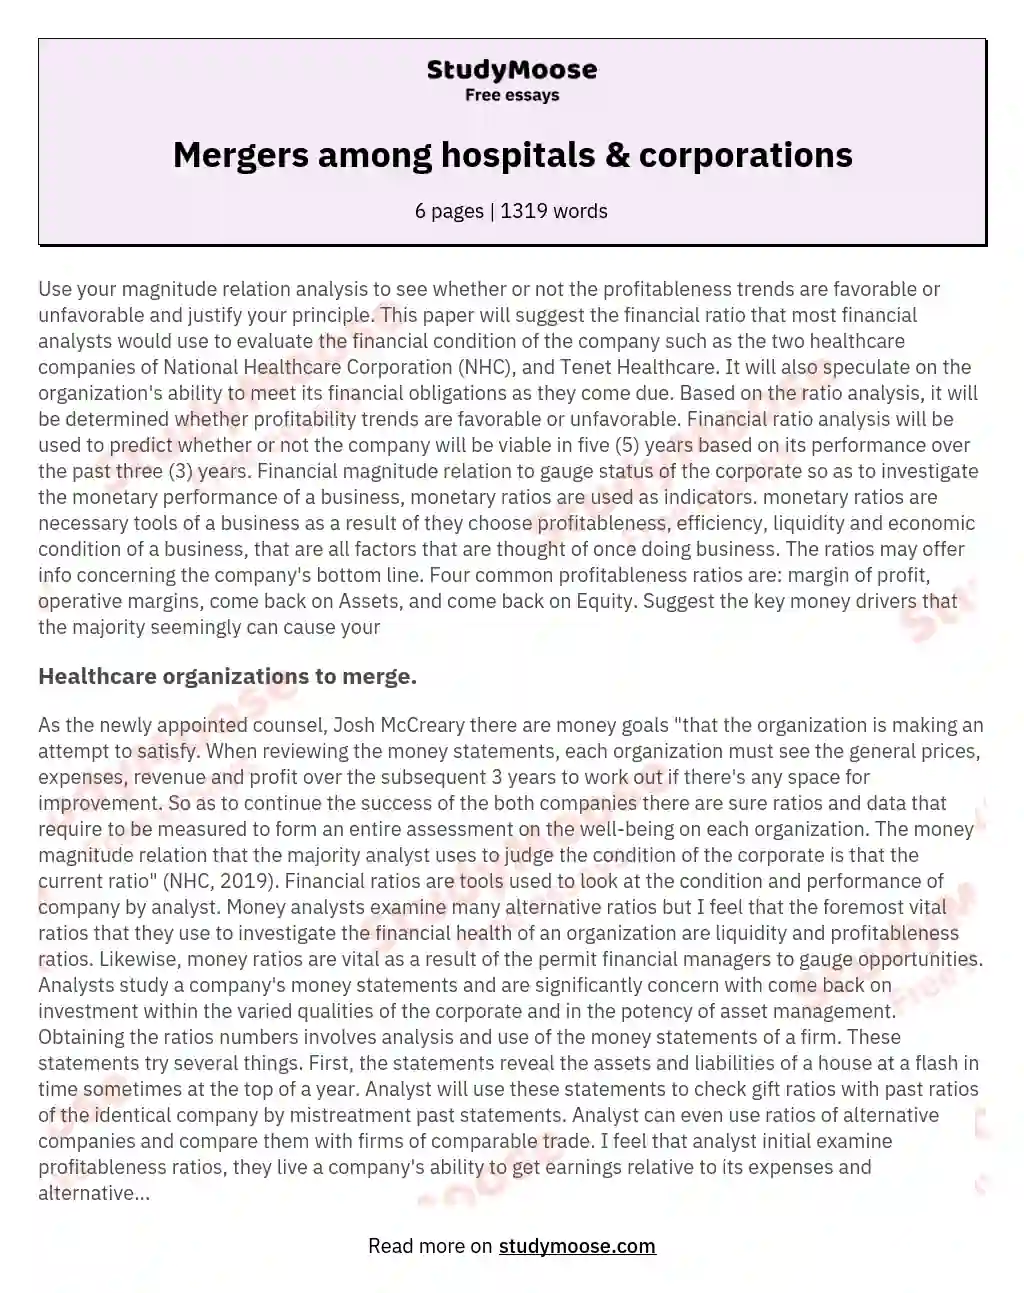 Mergers among hospitals & corporations essay